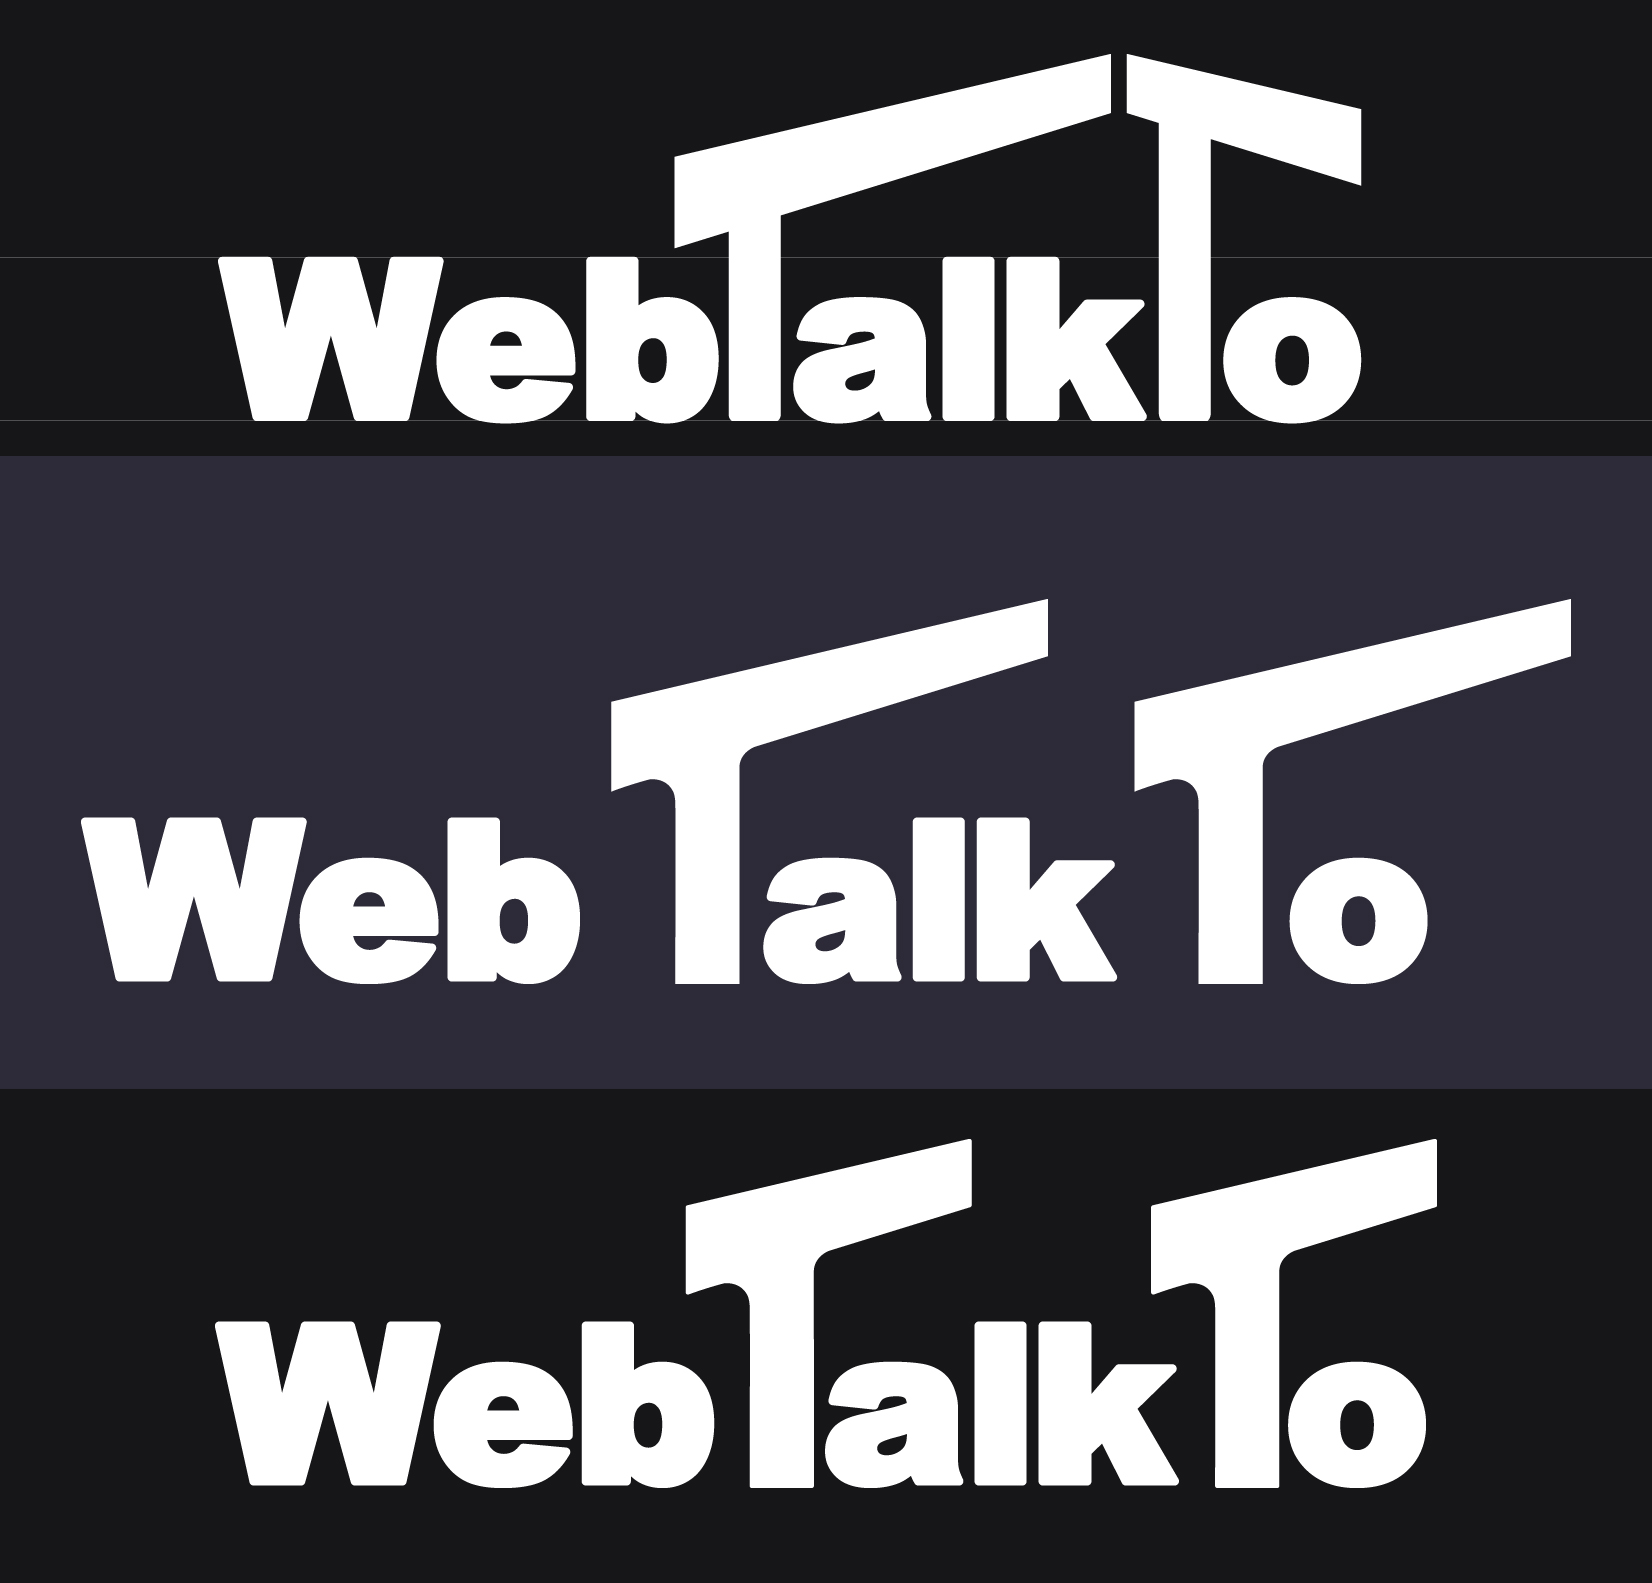 16-webtalkto-logo-tests-working-on-the-new-site-version-for-webtalkto